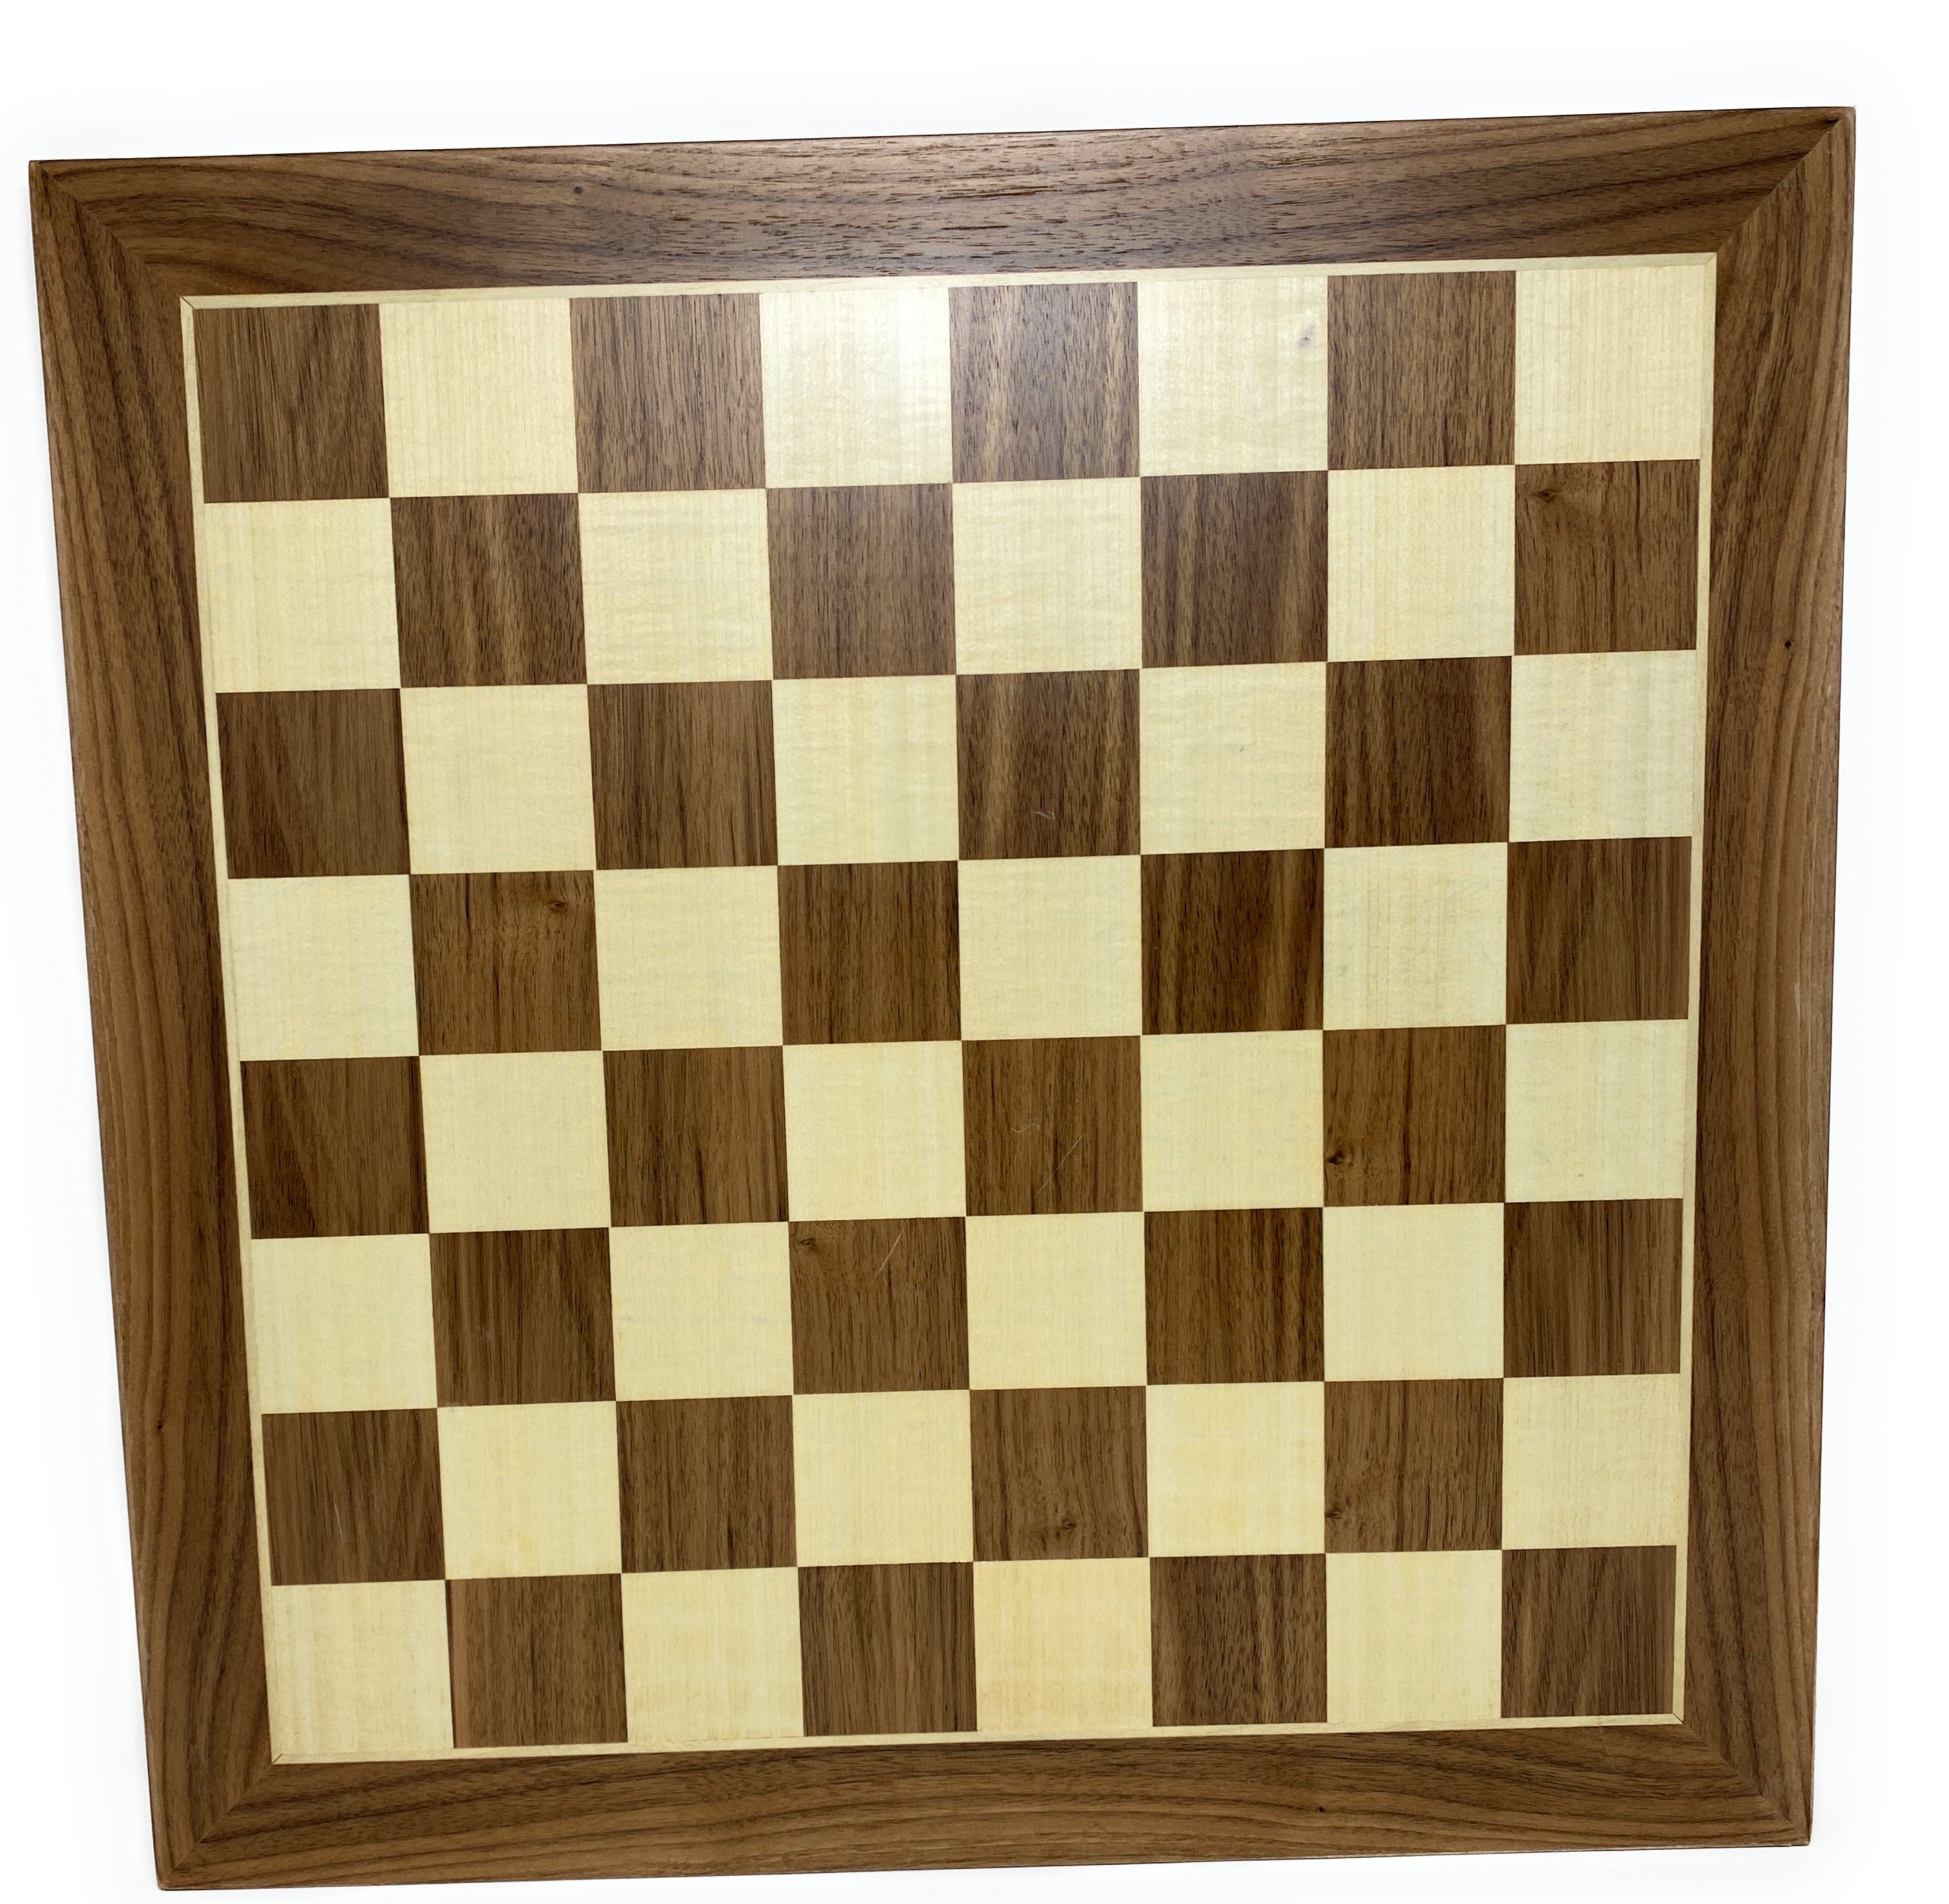 Straight Up Chess Board - Walnut Maple